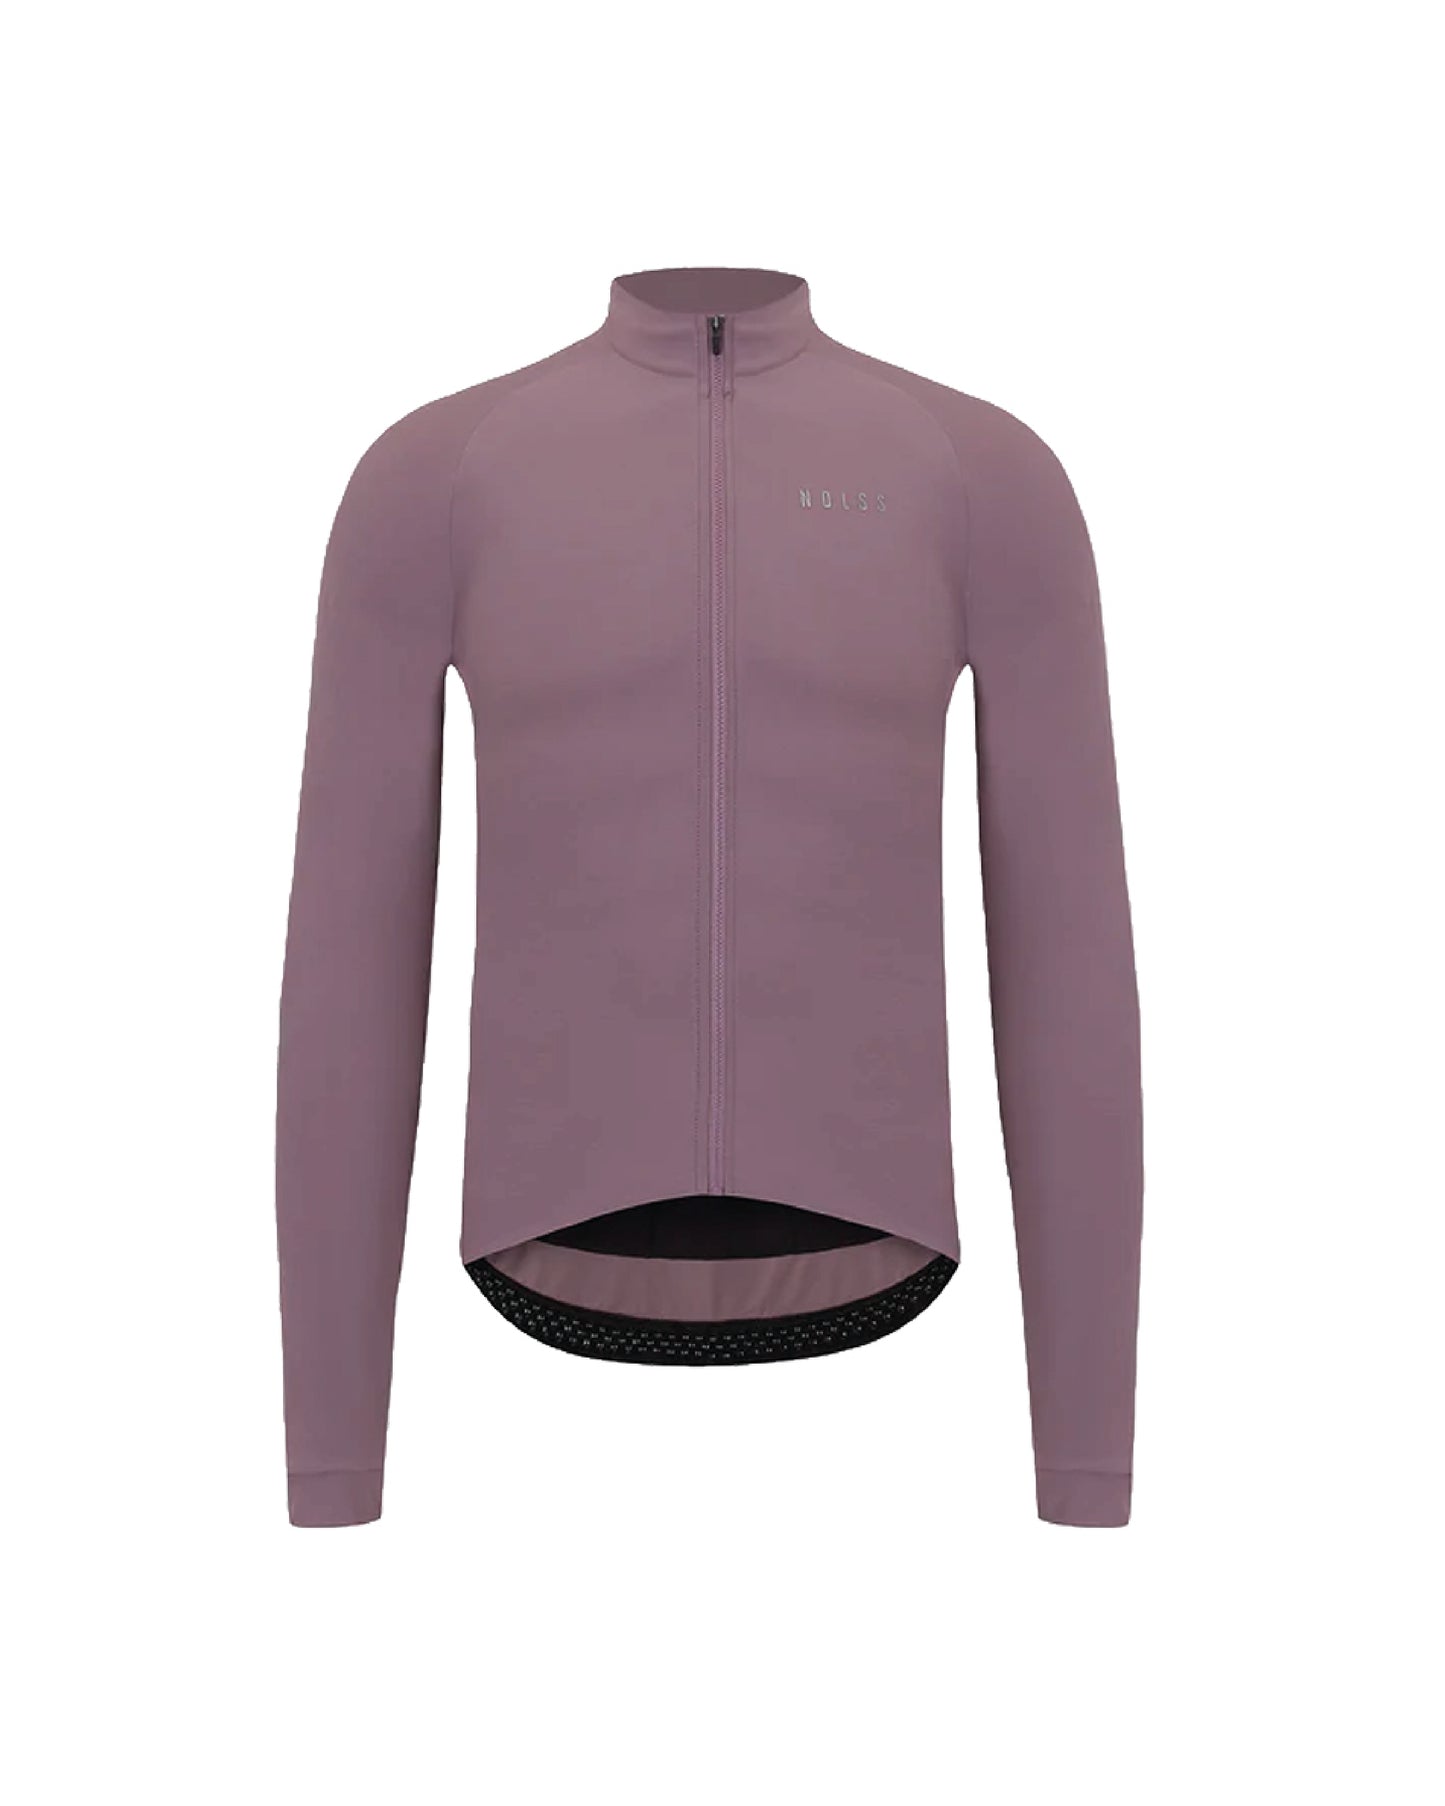 NDLSS Long Sleeve Jersey AW22 - Lavender